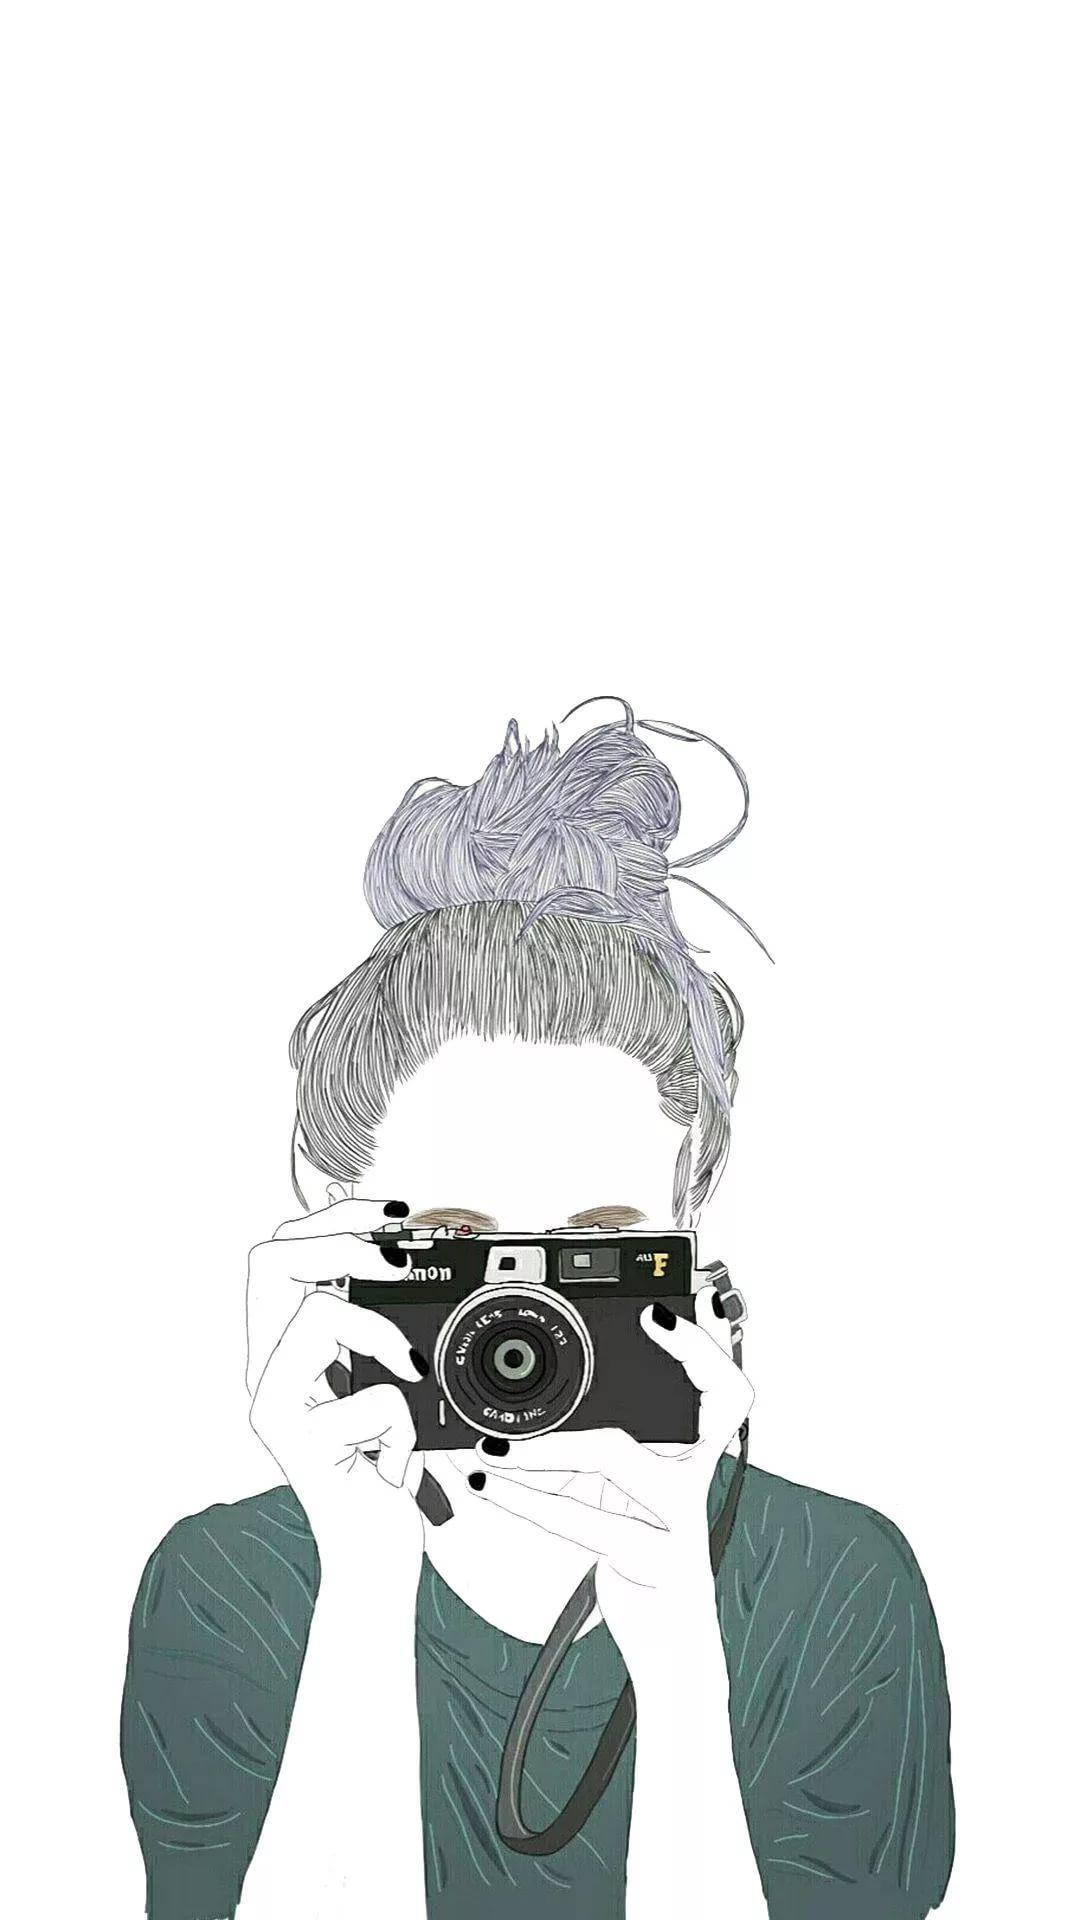 Tumblr Girl iPhone Wallpaper: Image, Art Category